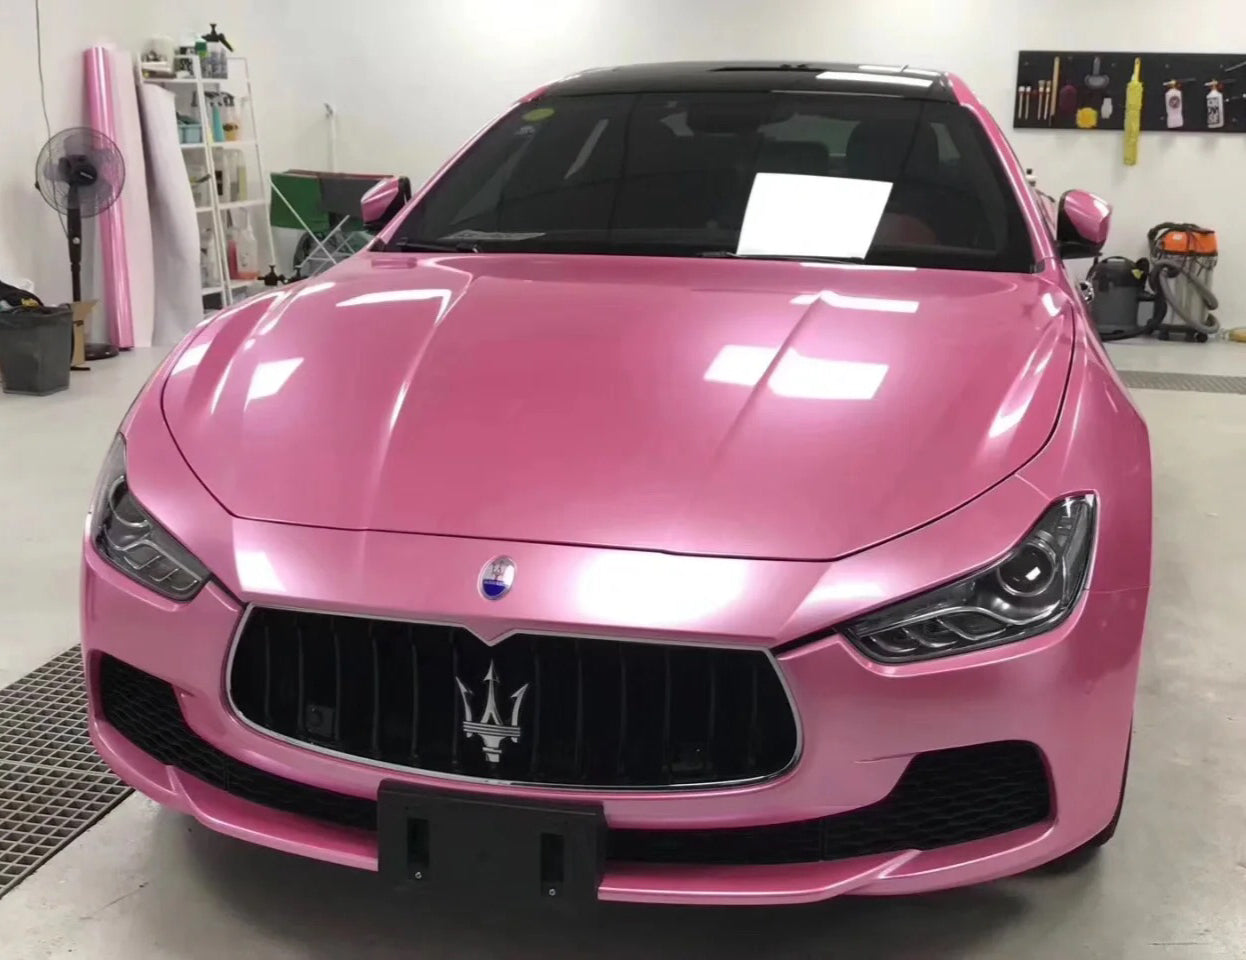 Gloss Metallic Pearl Pink Car Wrap